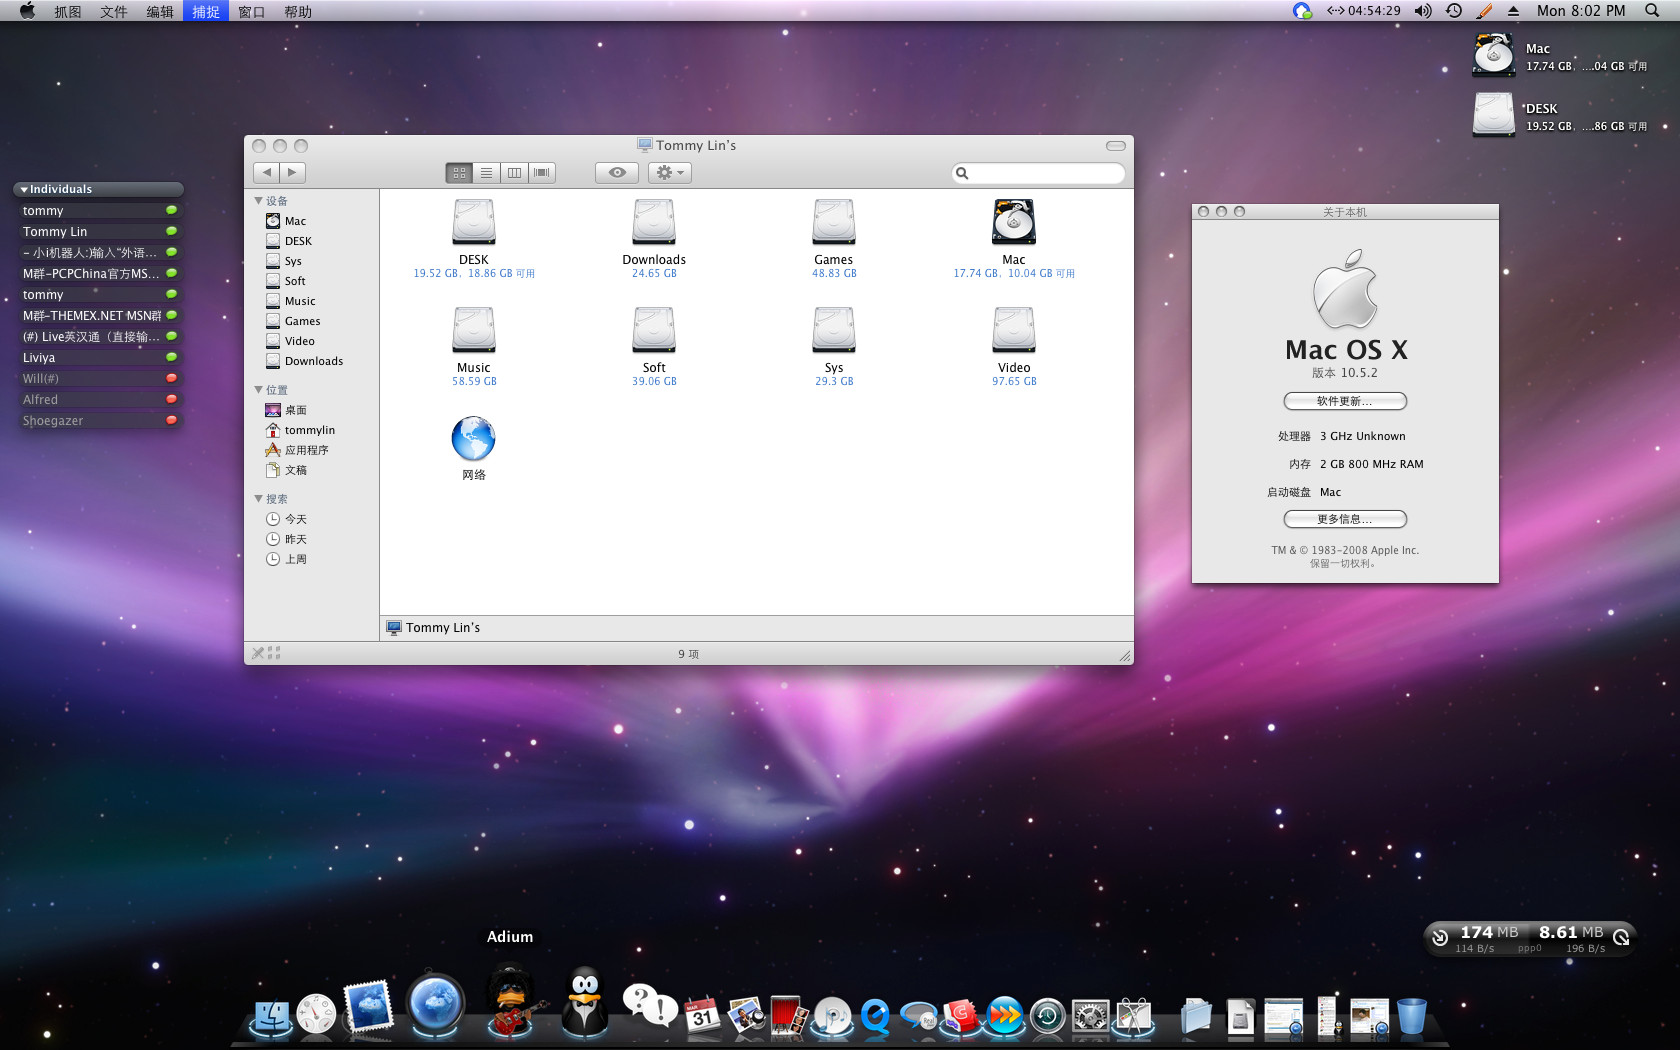 Macos support. Mac os x 10.5 Leopard. Mac os 10.6.8 системные требования. Mac os x 10.6. Интерфейс Mac os.